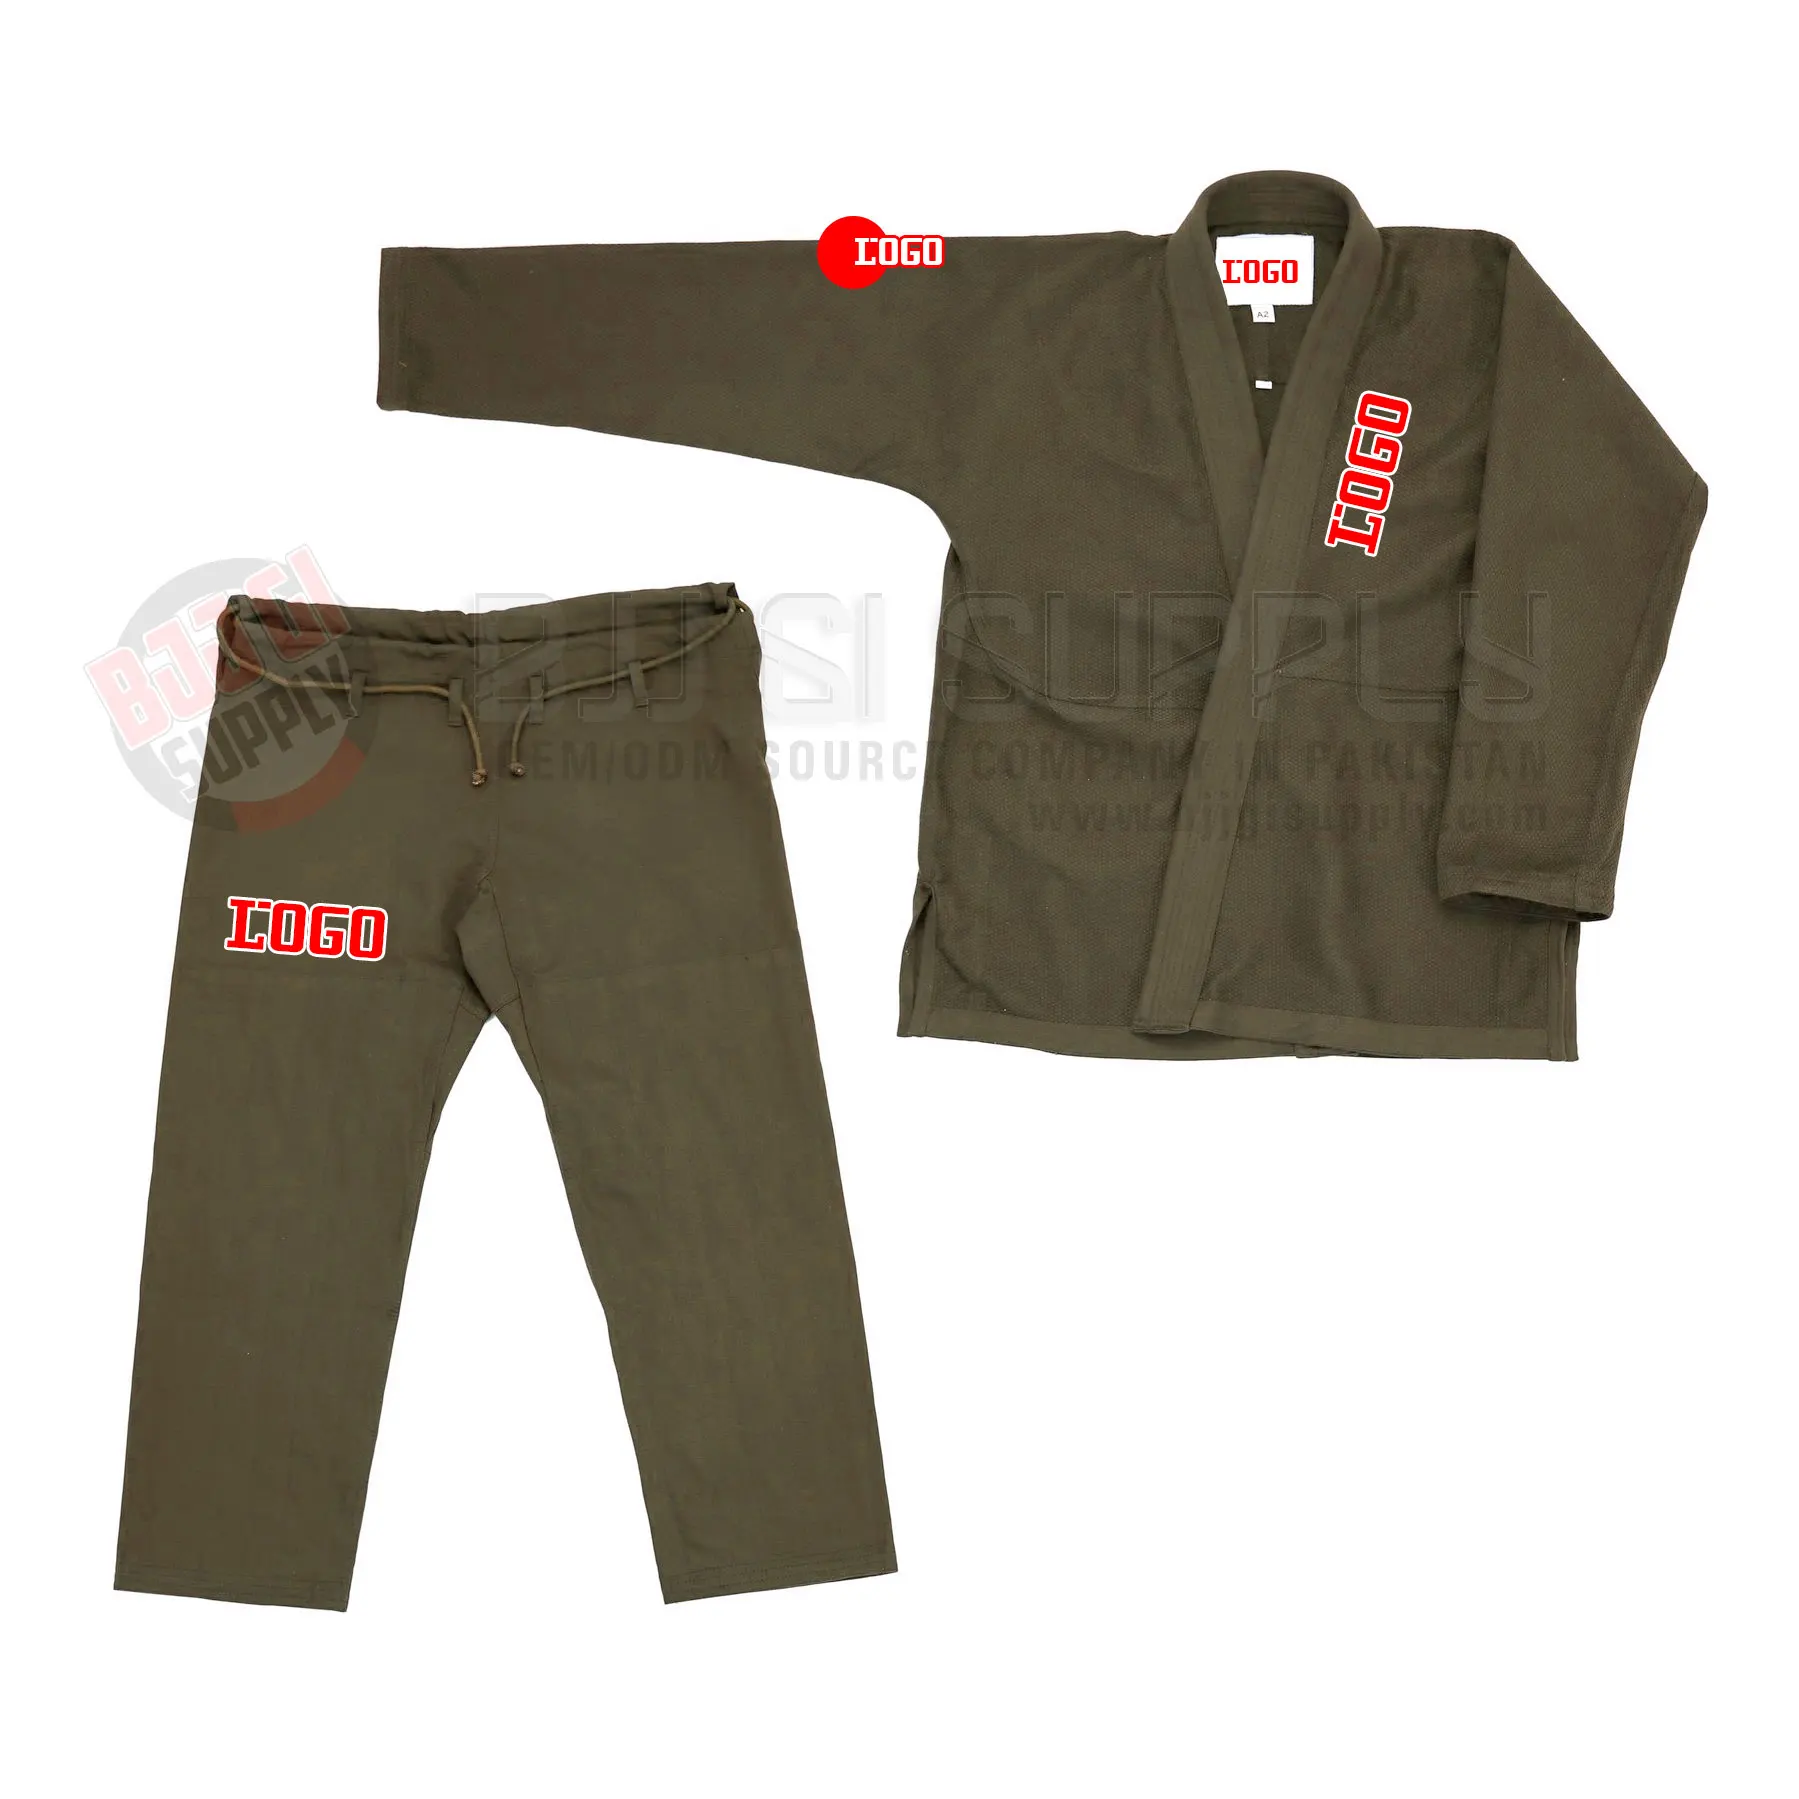 OEM Customize jujitsu and kimono / BJJ GI suits / judo uniform (10000003170164)